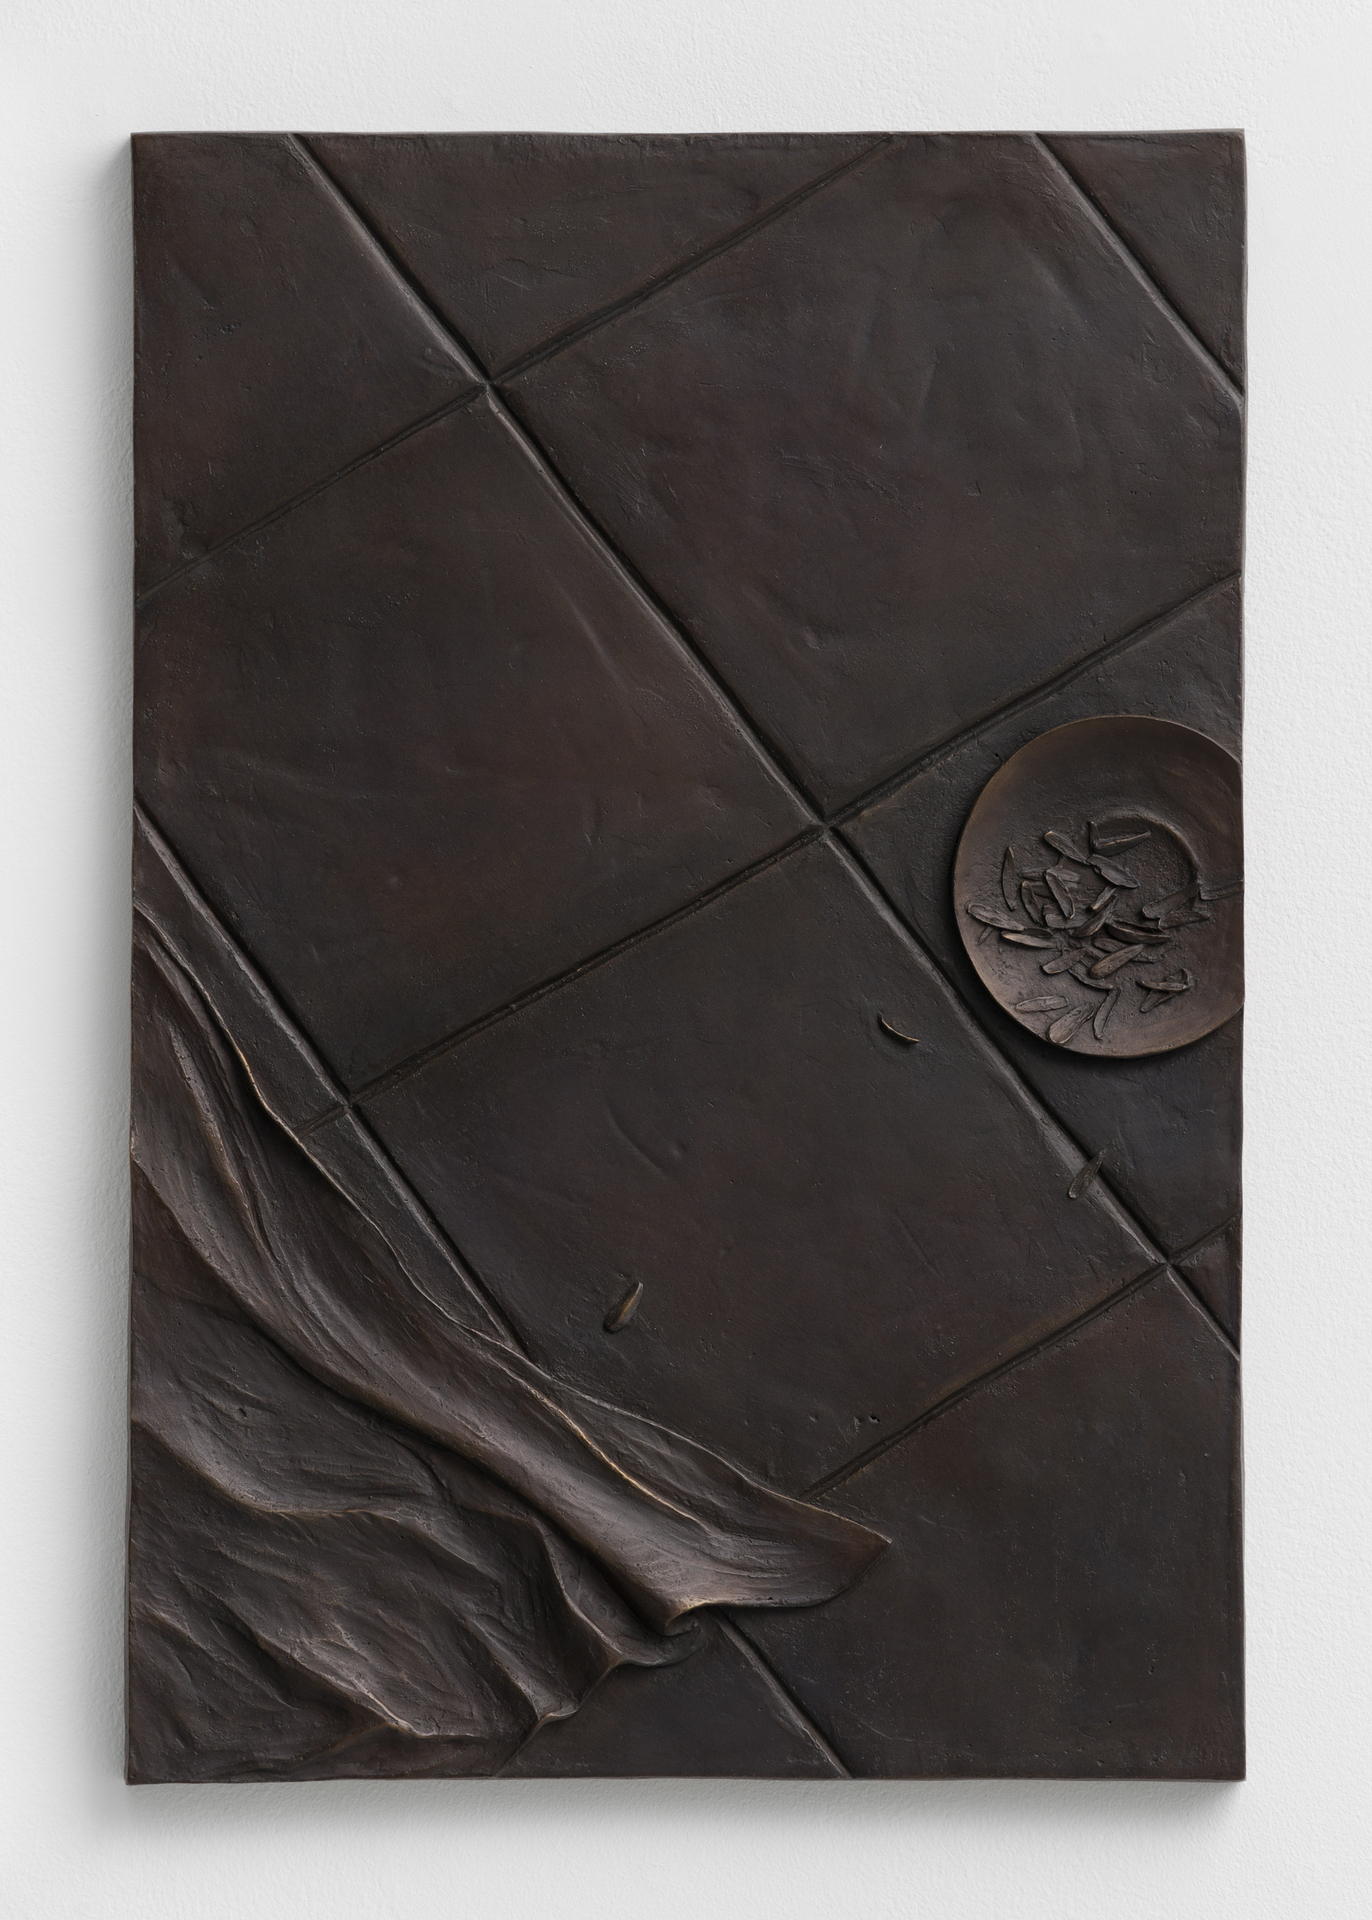 Aia Sofia Coverley Turan, A Hanful of Salt, 2021, bronze, 60 x 40 cm